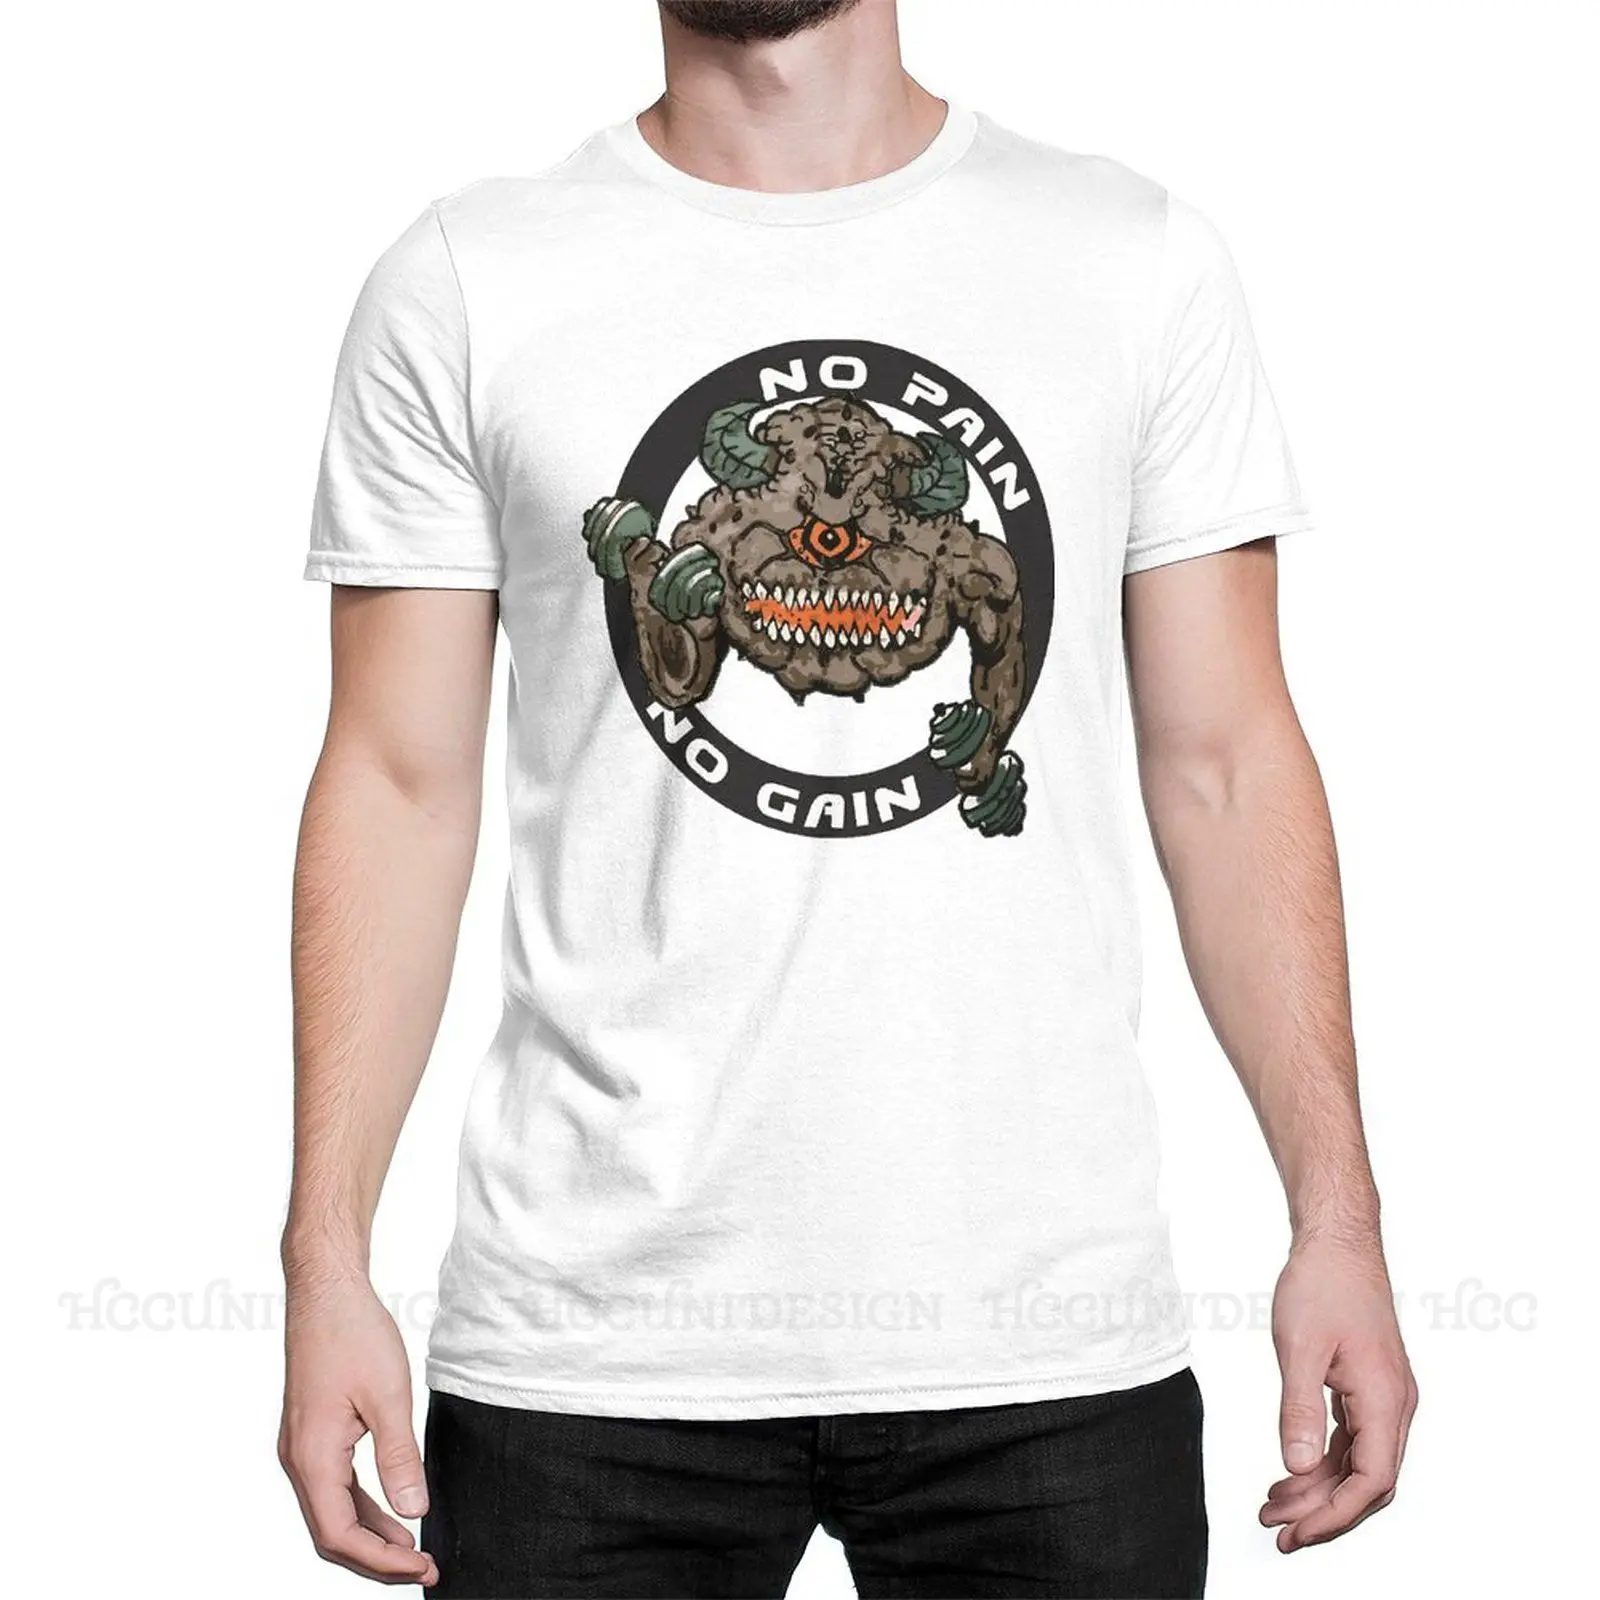 

GAIN Elemenental Print Cotton T-Shirt Camiseta Hombre Doom Slayer Shooting Games Men Fashion Streetwear Adult Shirt